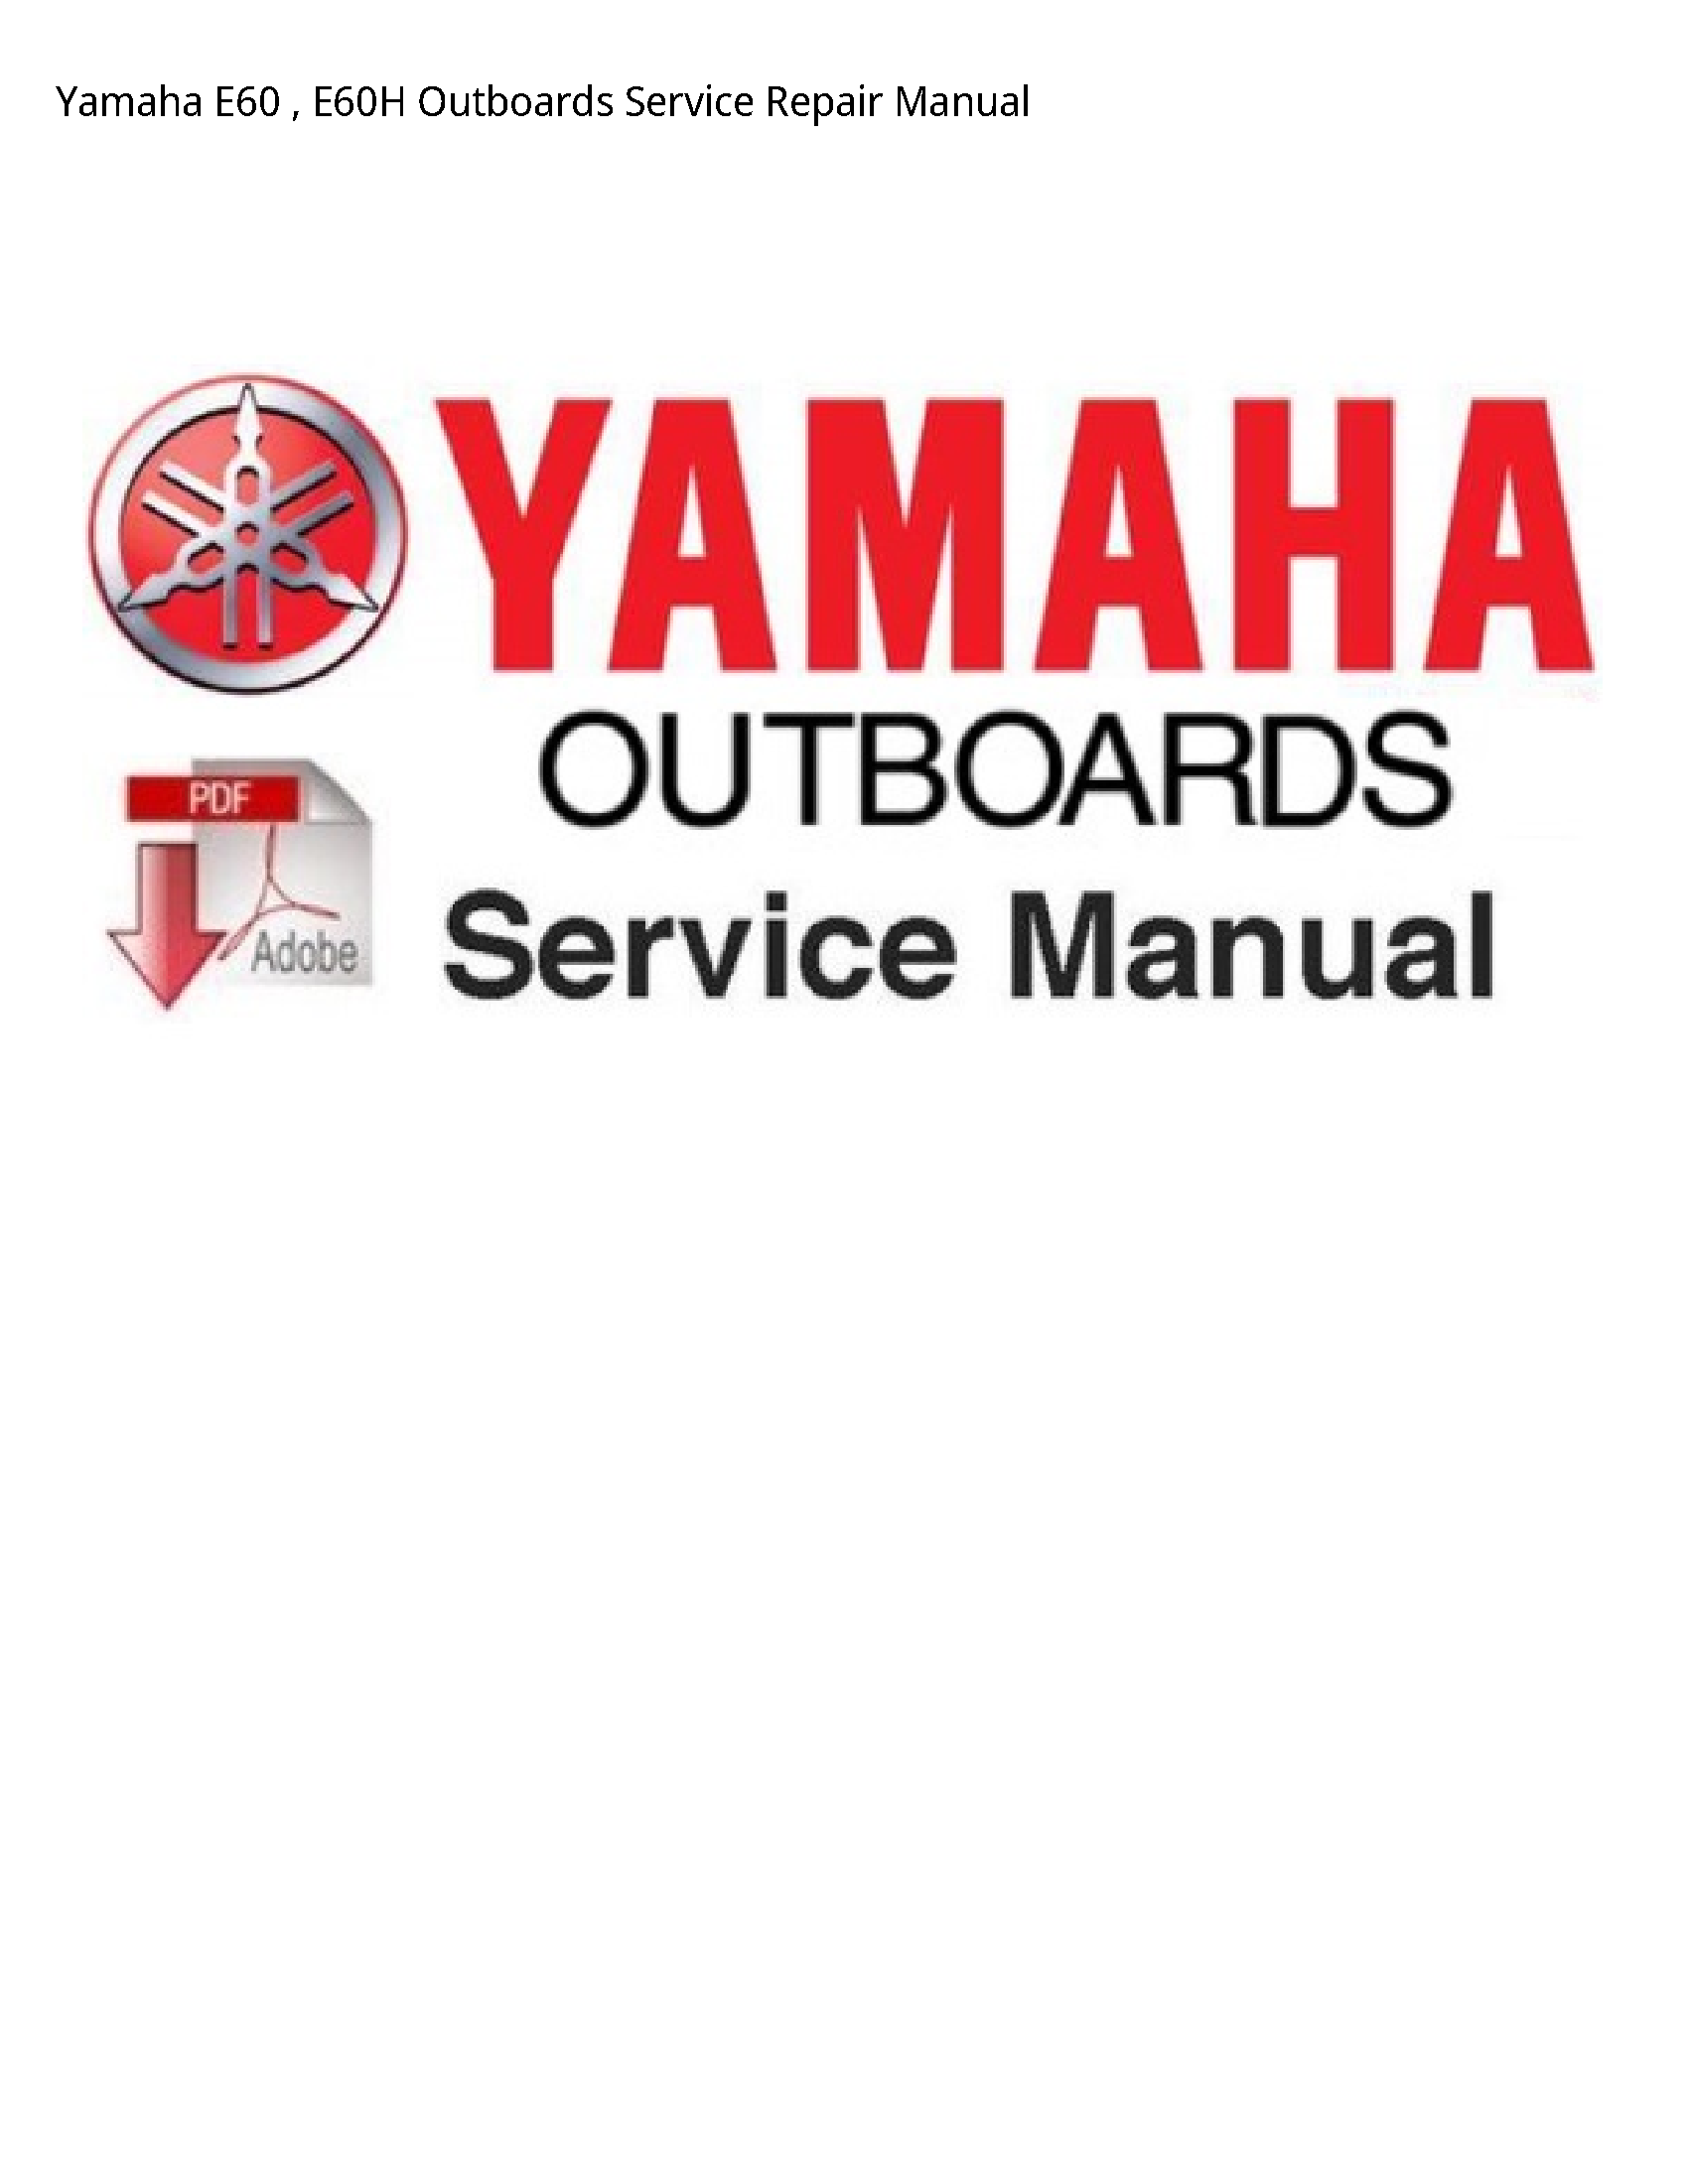 Yamaha E60 Outboards manual